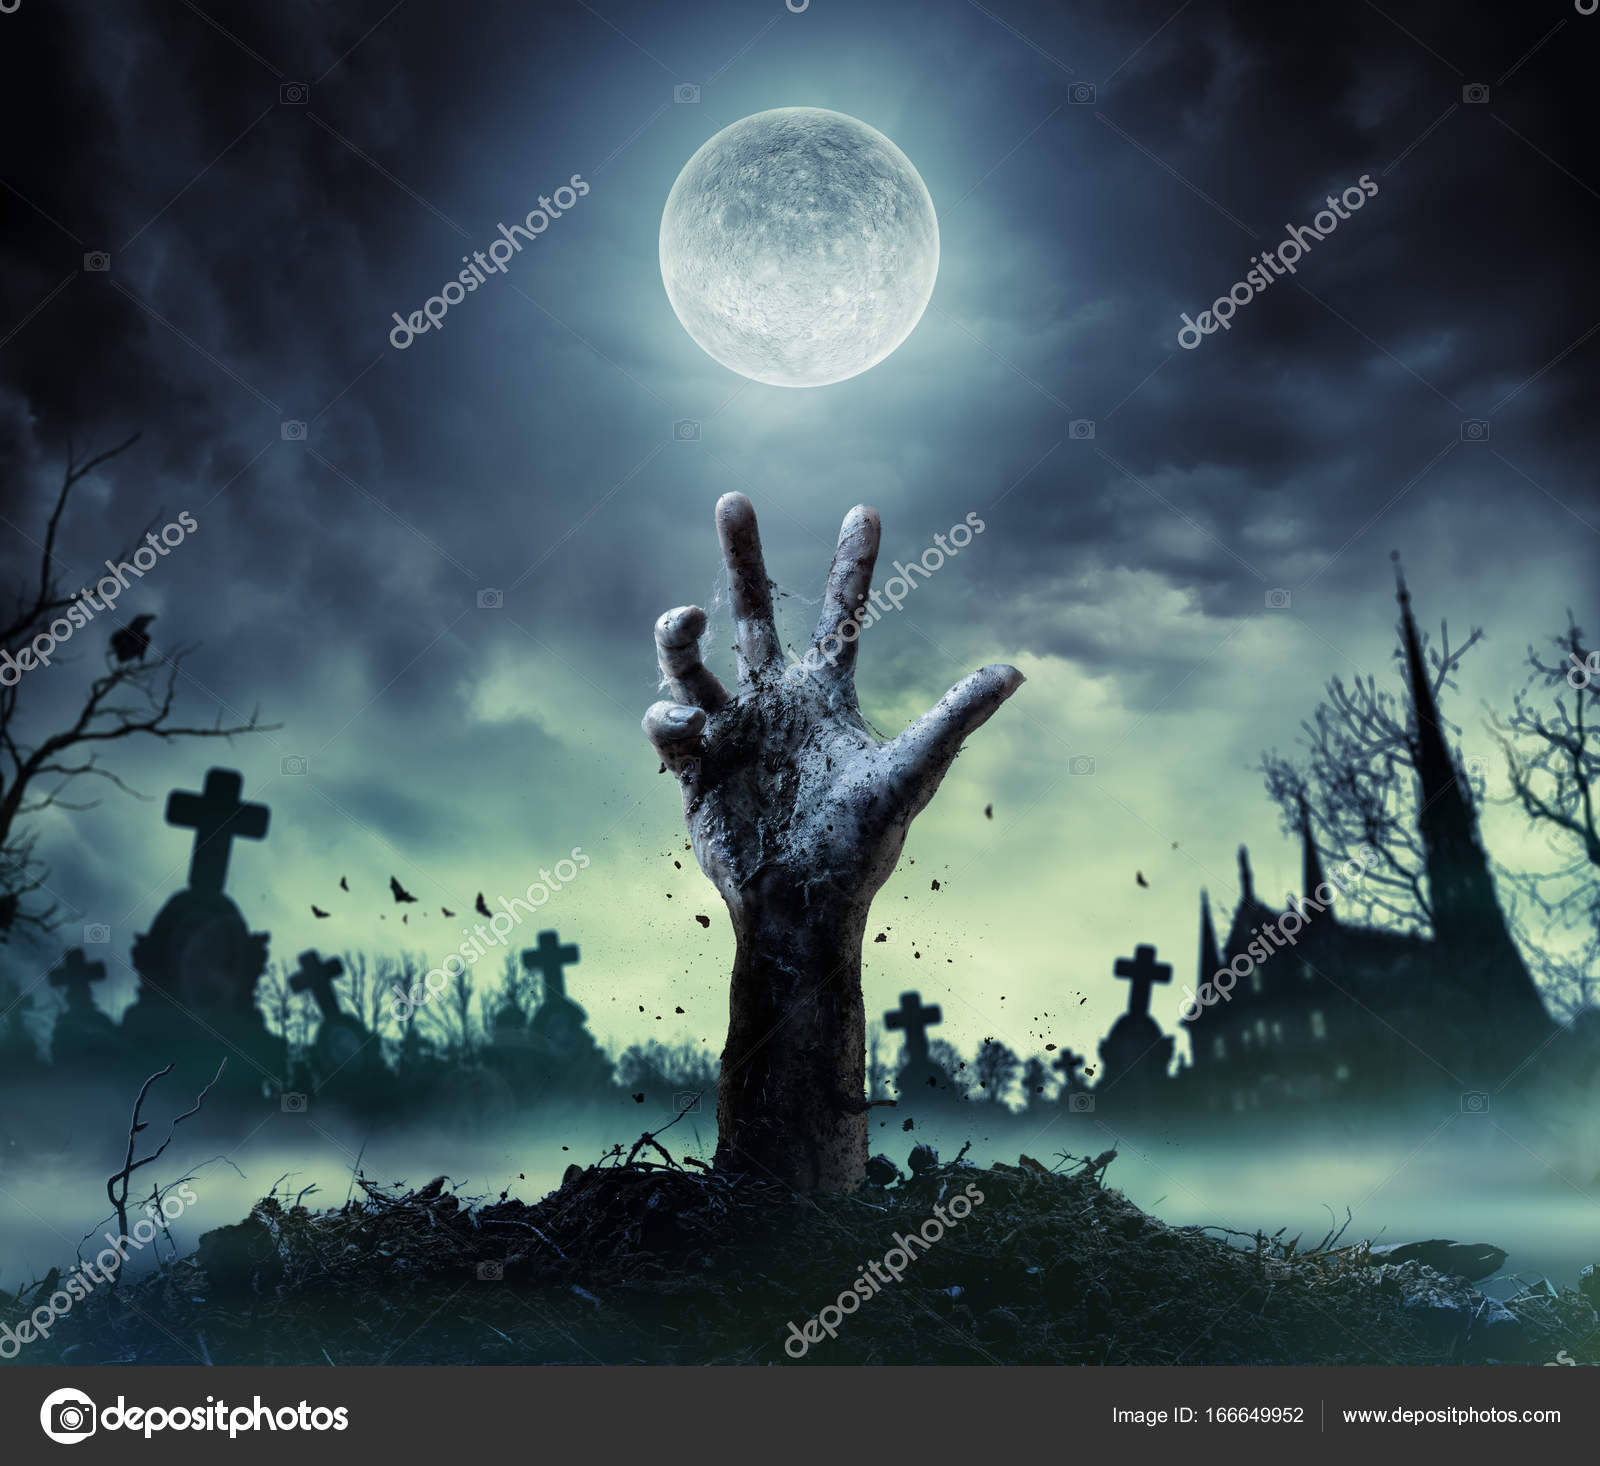 Zombie mano levantándose de un cementerio — Foto de stock #166649952 ...